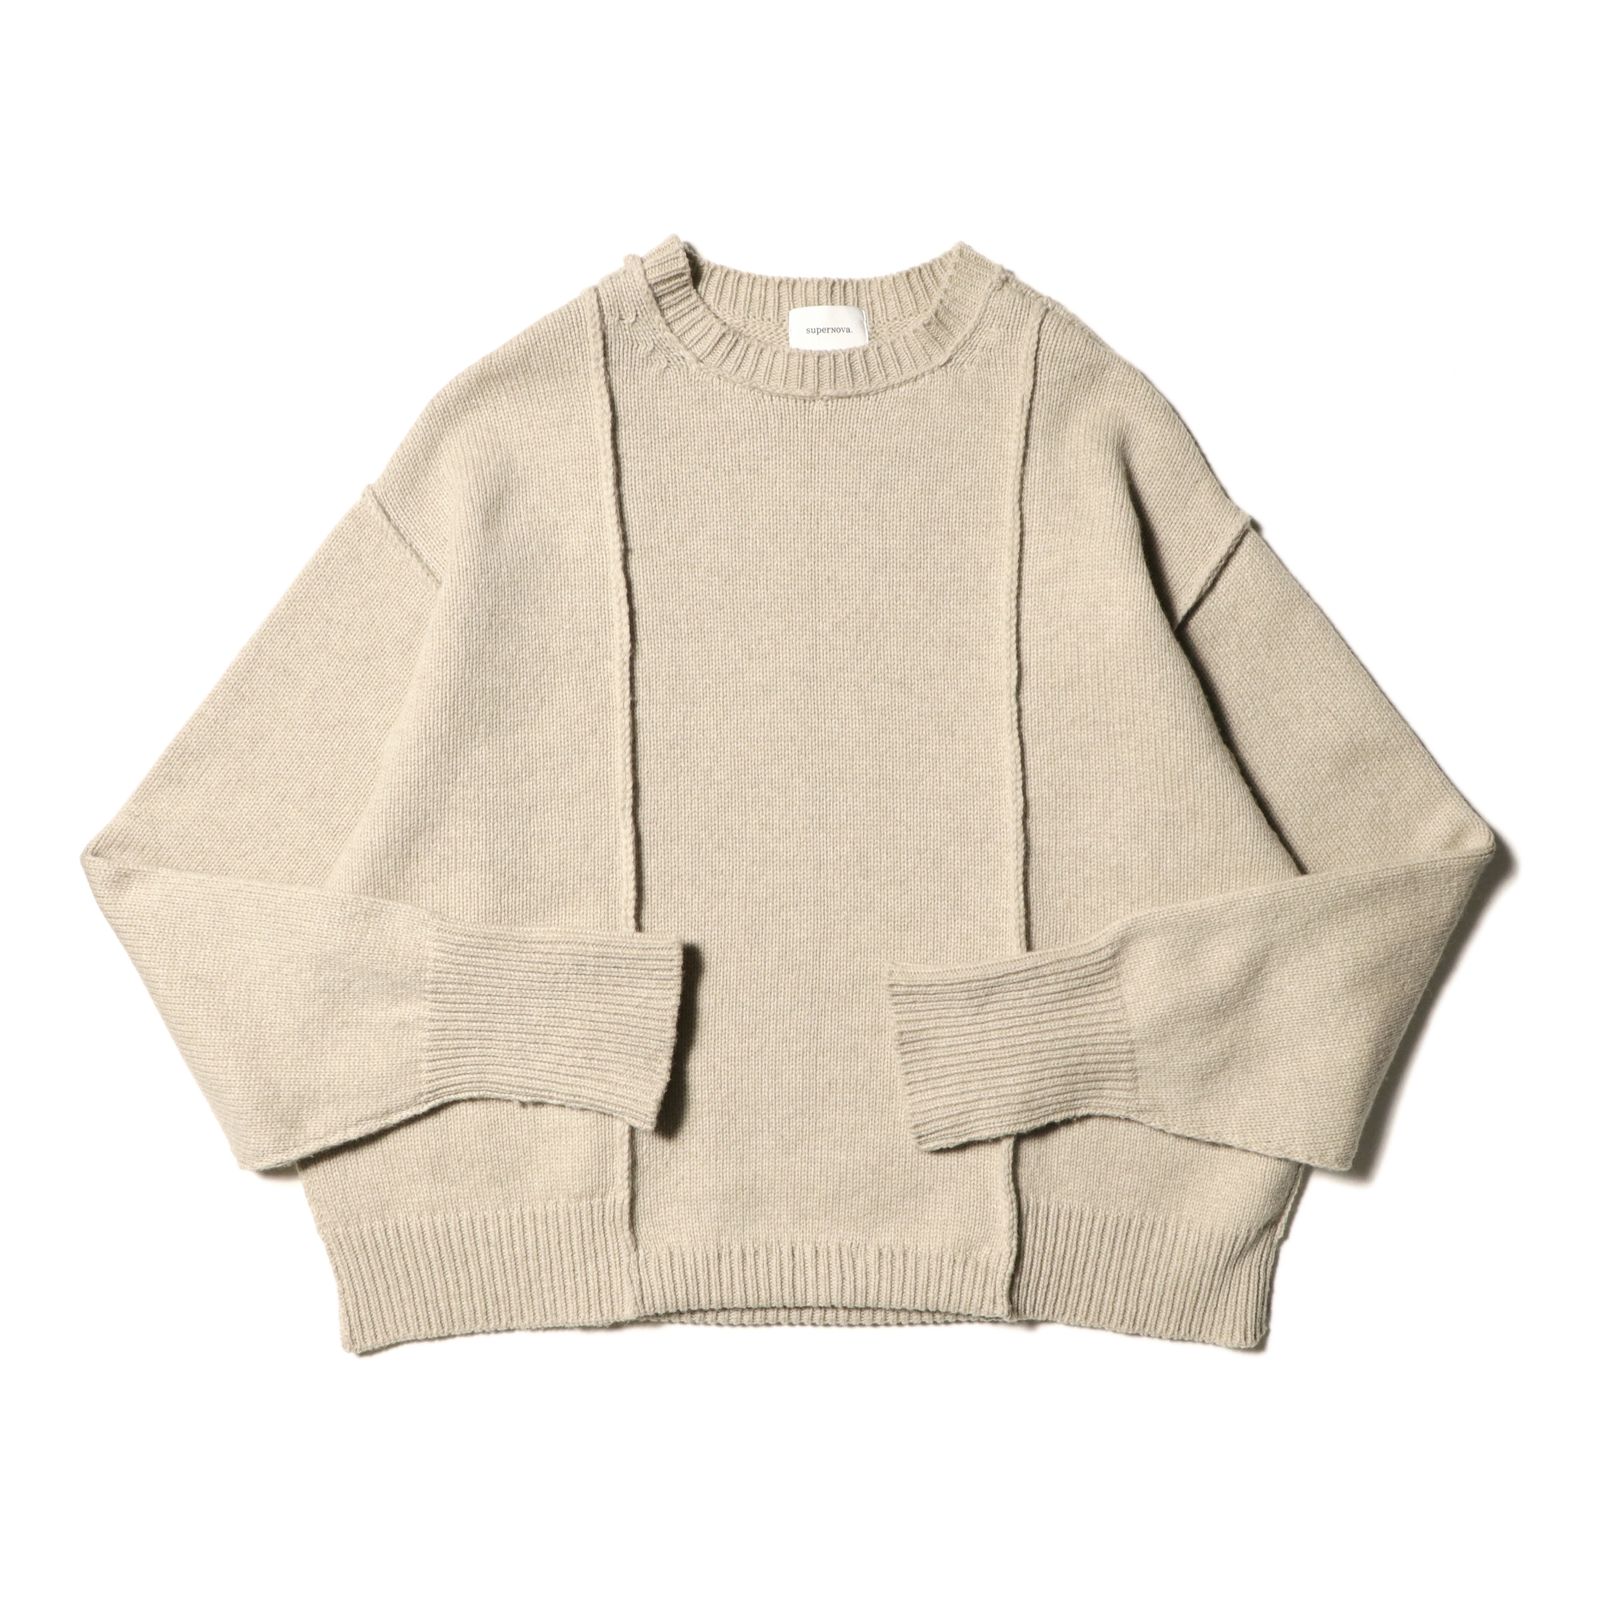 superNova. - Moebius knit sweater / クルーネックセーター 